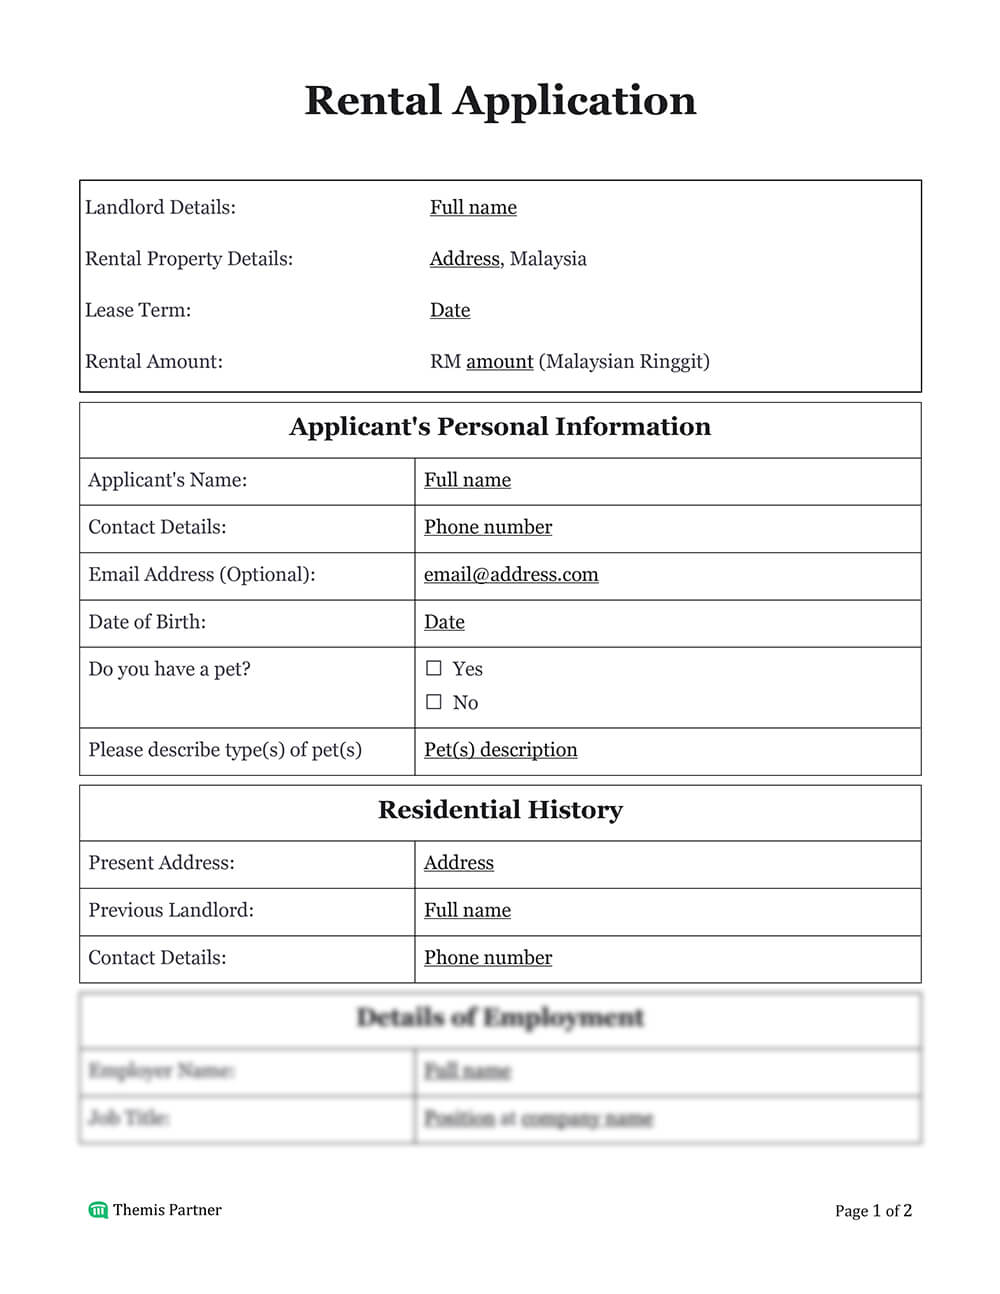 Rental application template